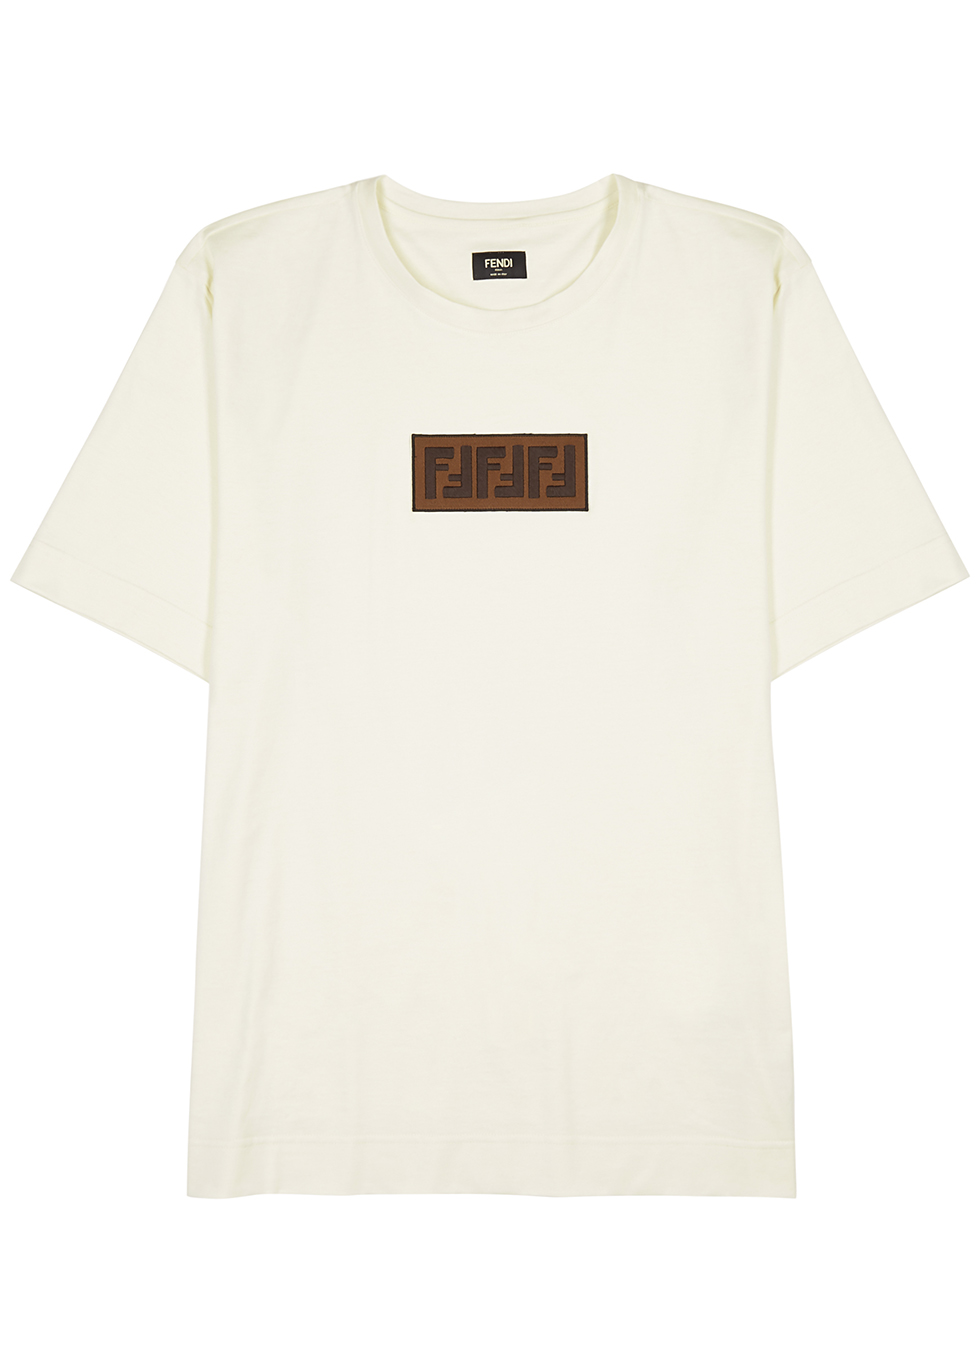 Fendi T Shirt White Top Sellers, 56% OFF | www.hcb.cat